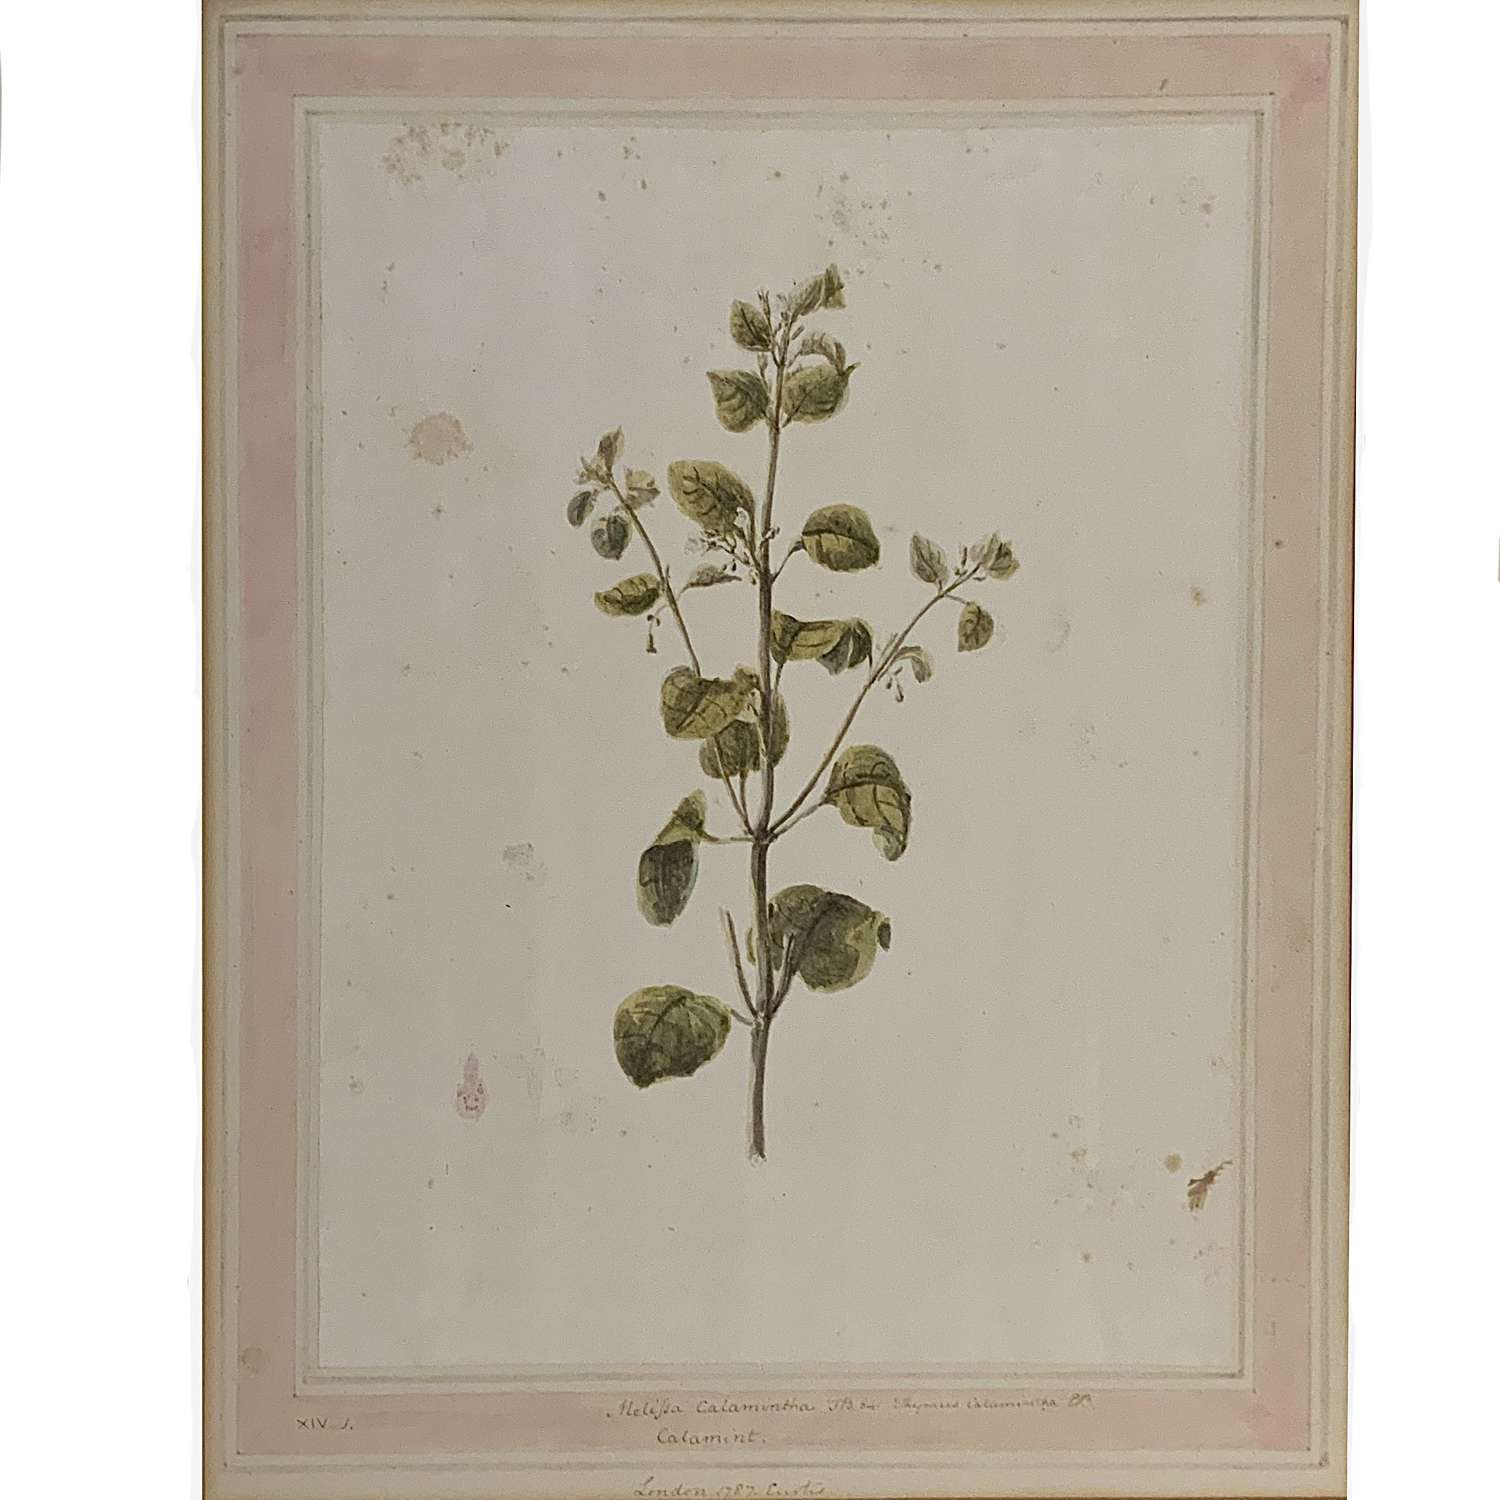 Lady Aylesford (1760–1832) Botanical Drawing “Melissa Calamintha” 1787